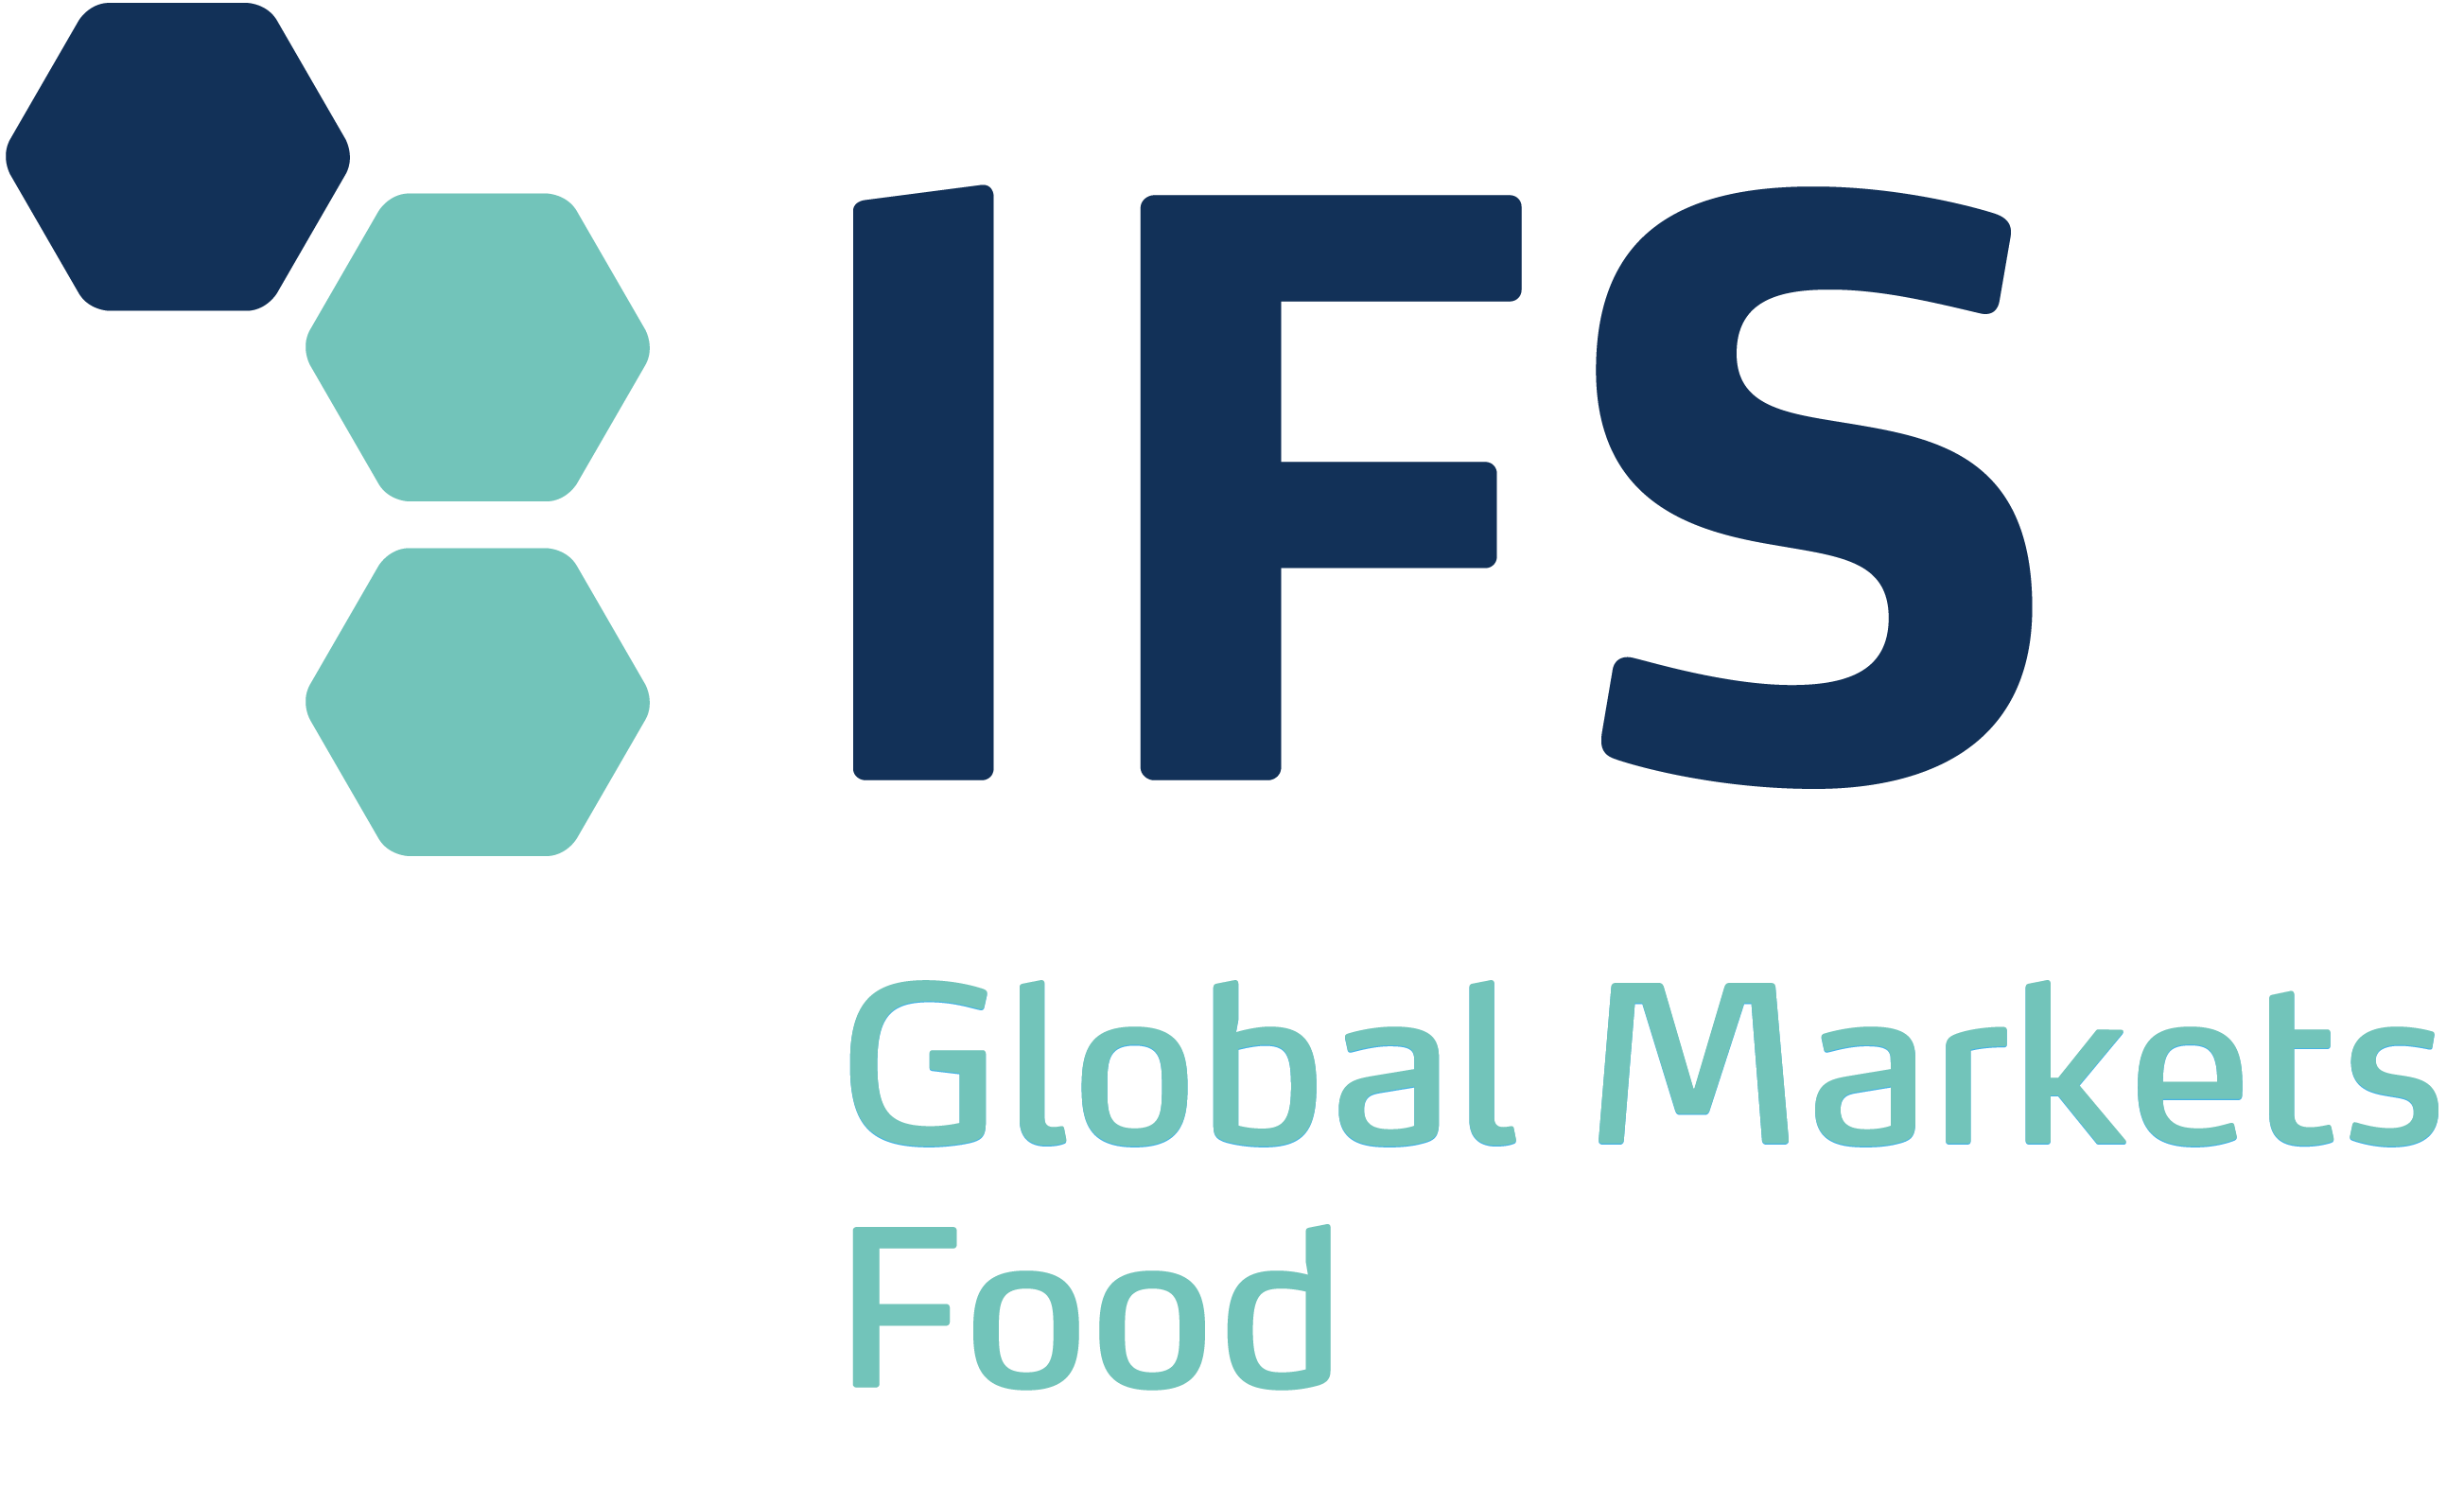 Global Markets Food